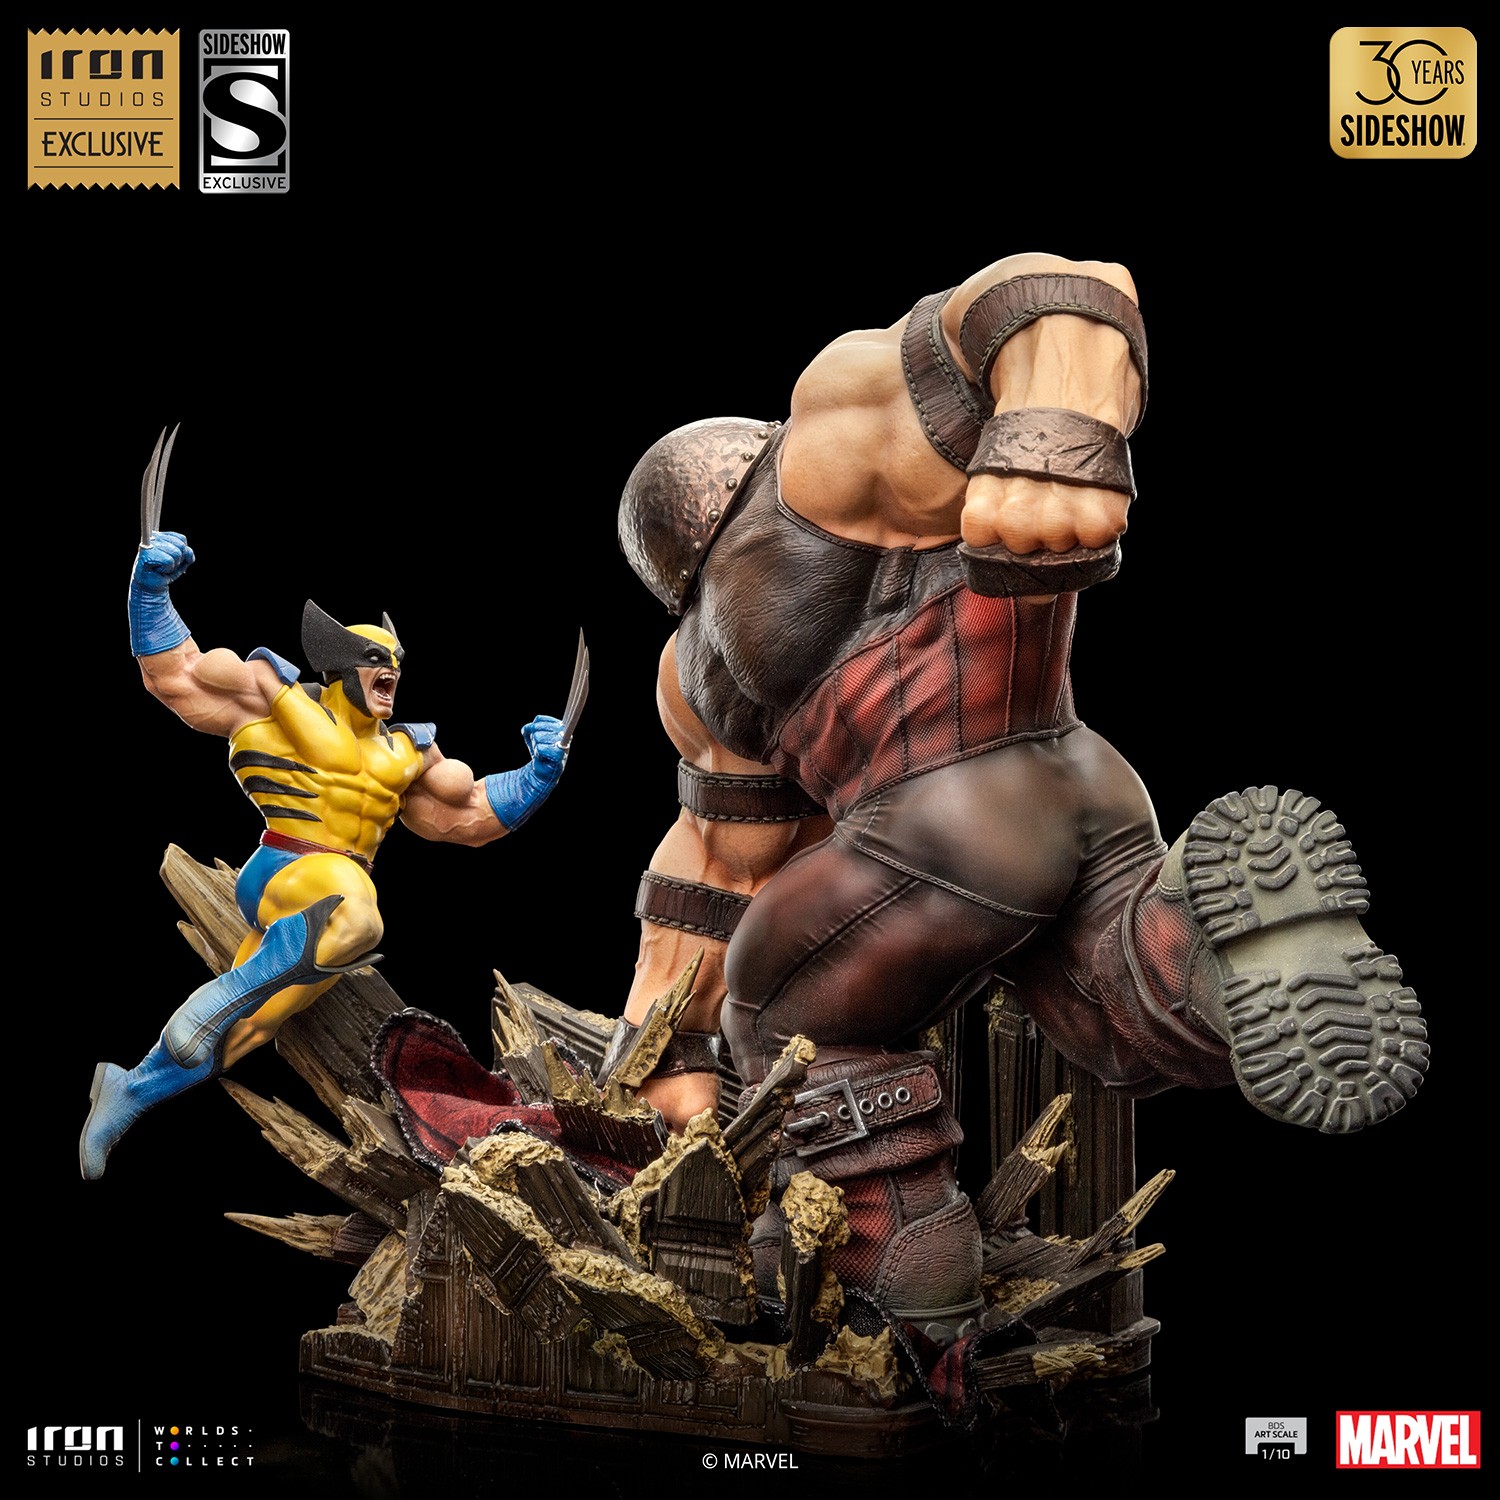 Wolverine vs Juggernaut Exclusive Edition (Prototype Shown) View 3